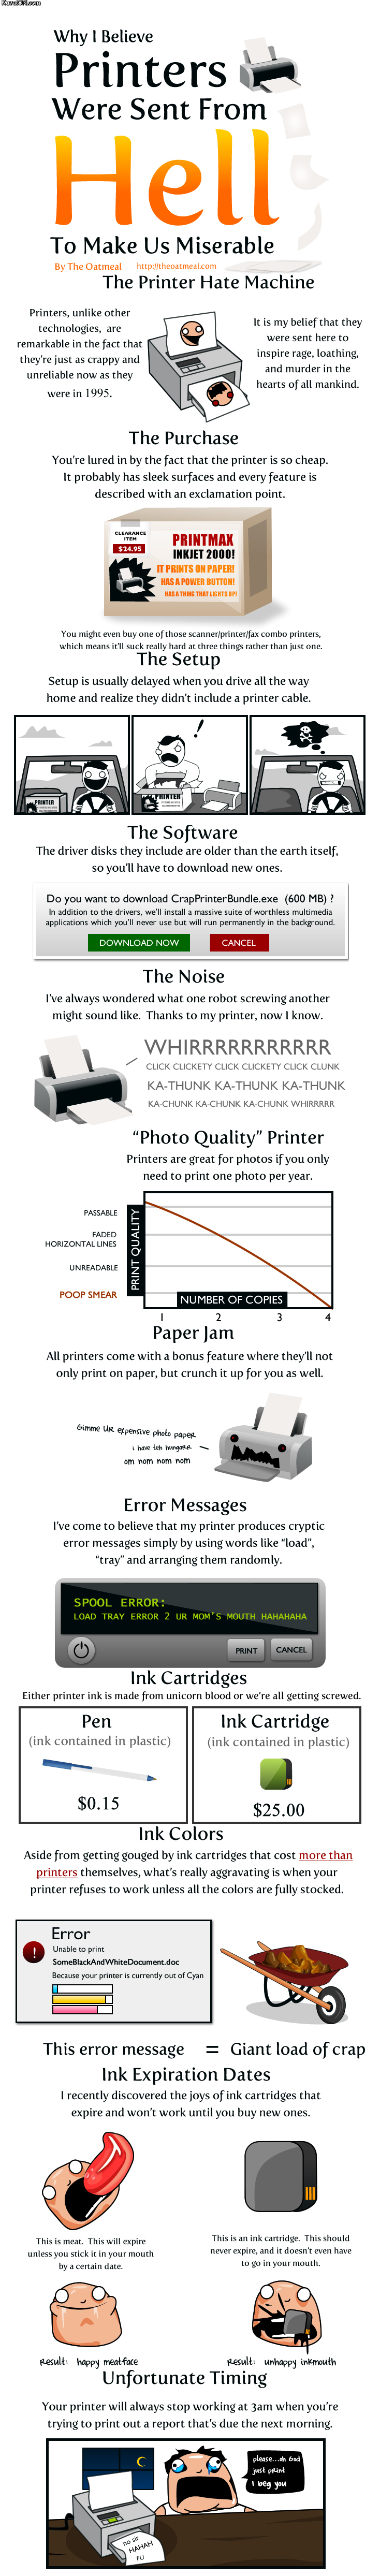 printers_from_hell.jpg